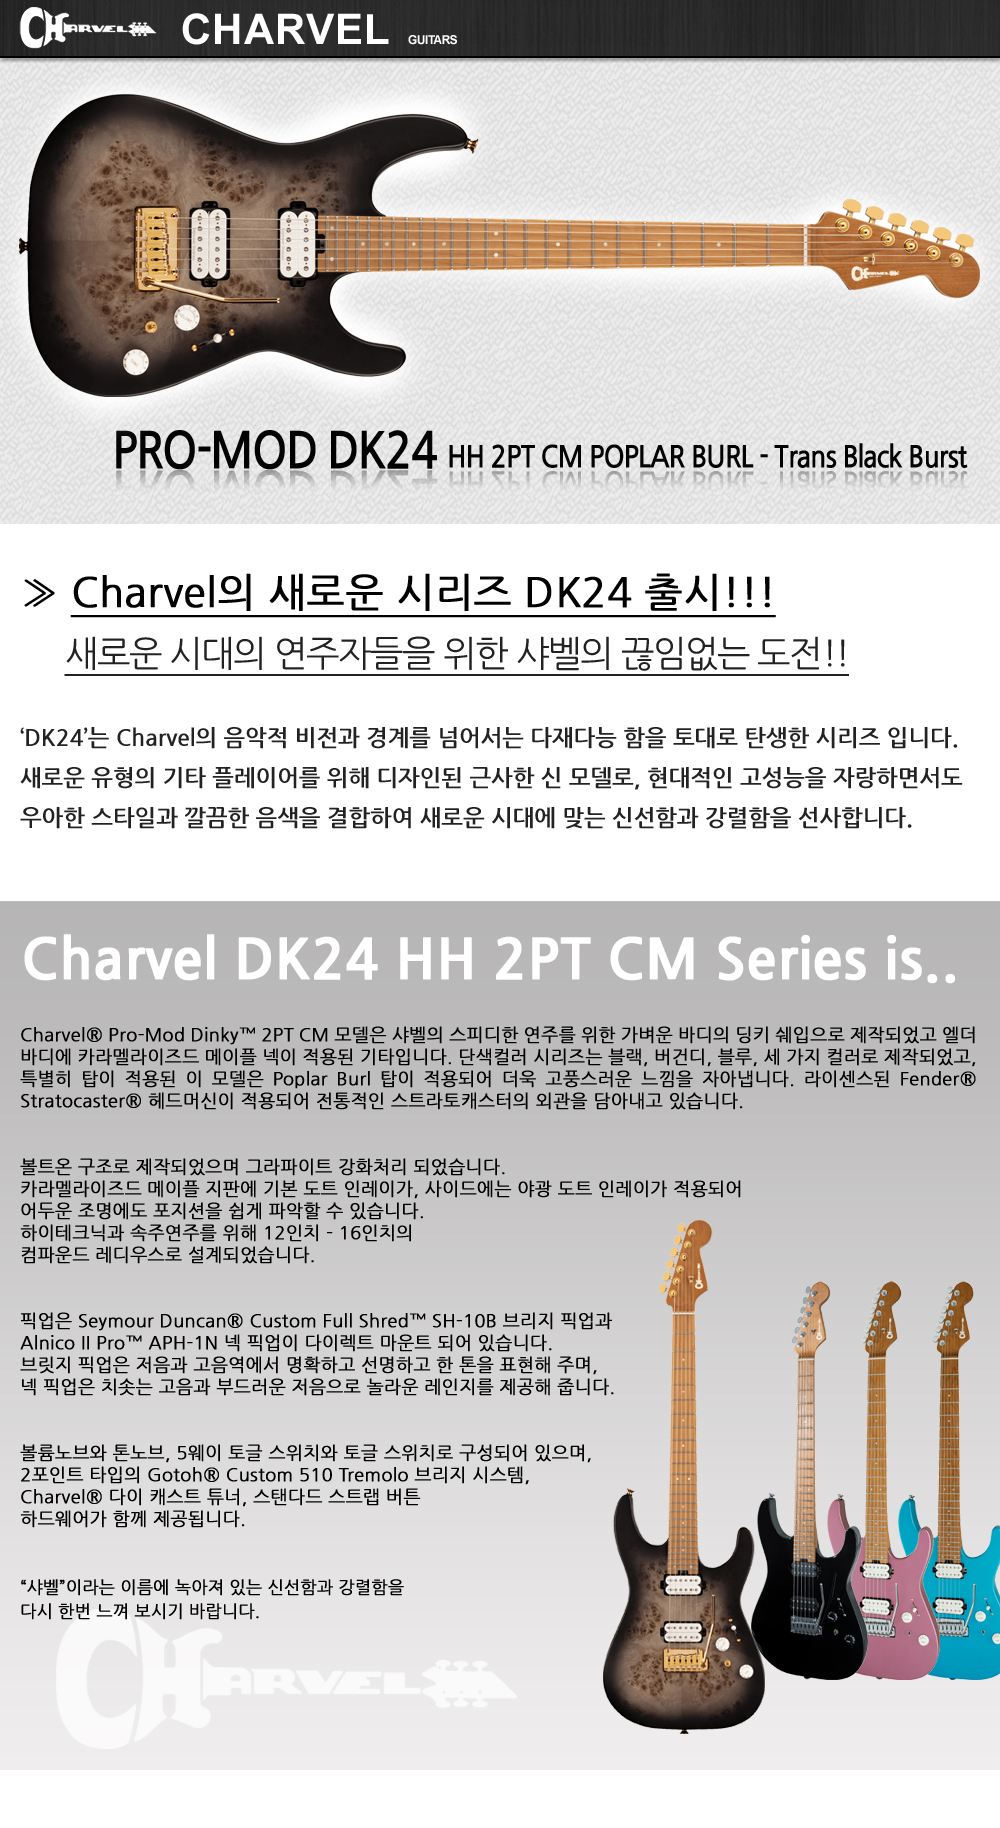 Chravel-DK24-HH-2PT-CM-PoplarBurl-TransBlackBurst_1_135620.jpg